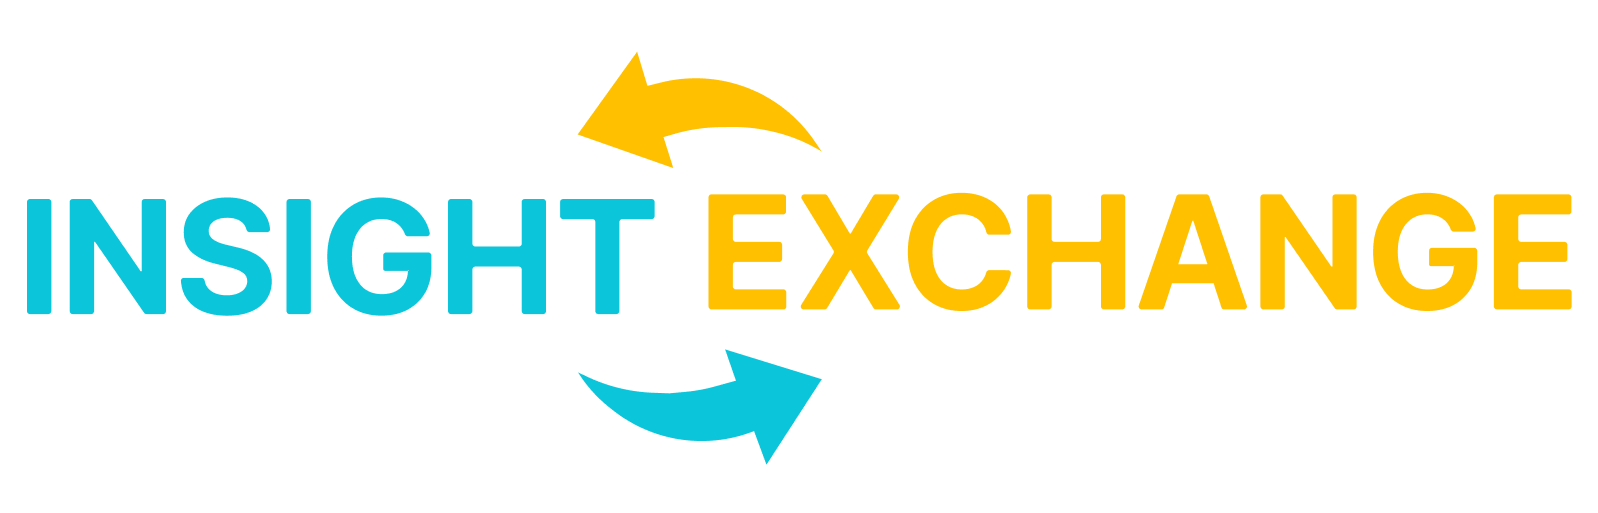 Insight Exchange Homepage Logo